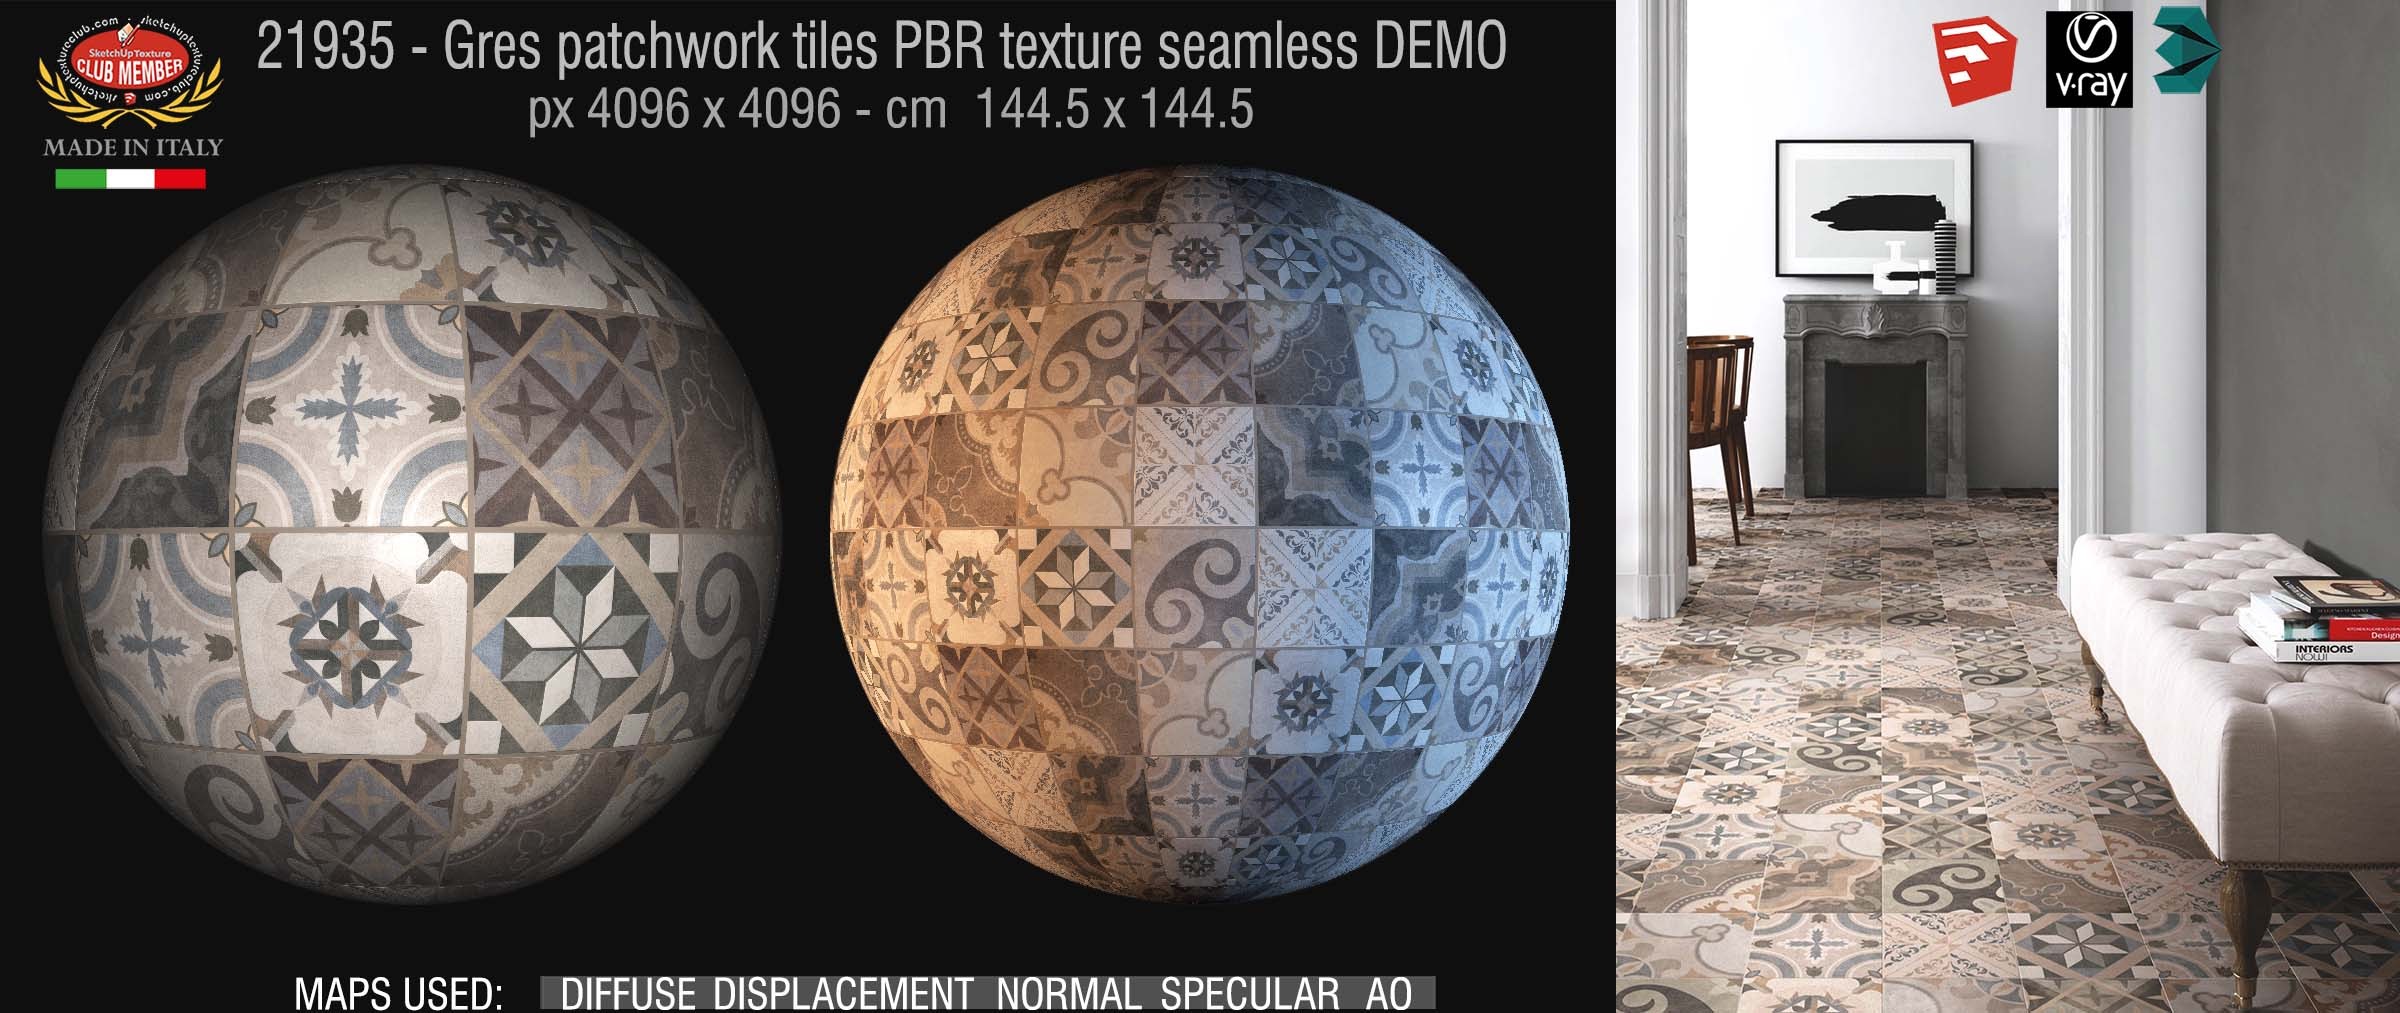 21935 Gres patchwork tiles PBR texture seamless DEMO